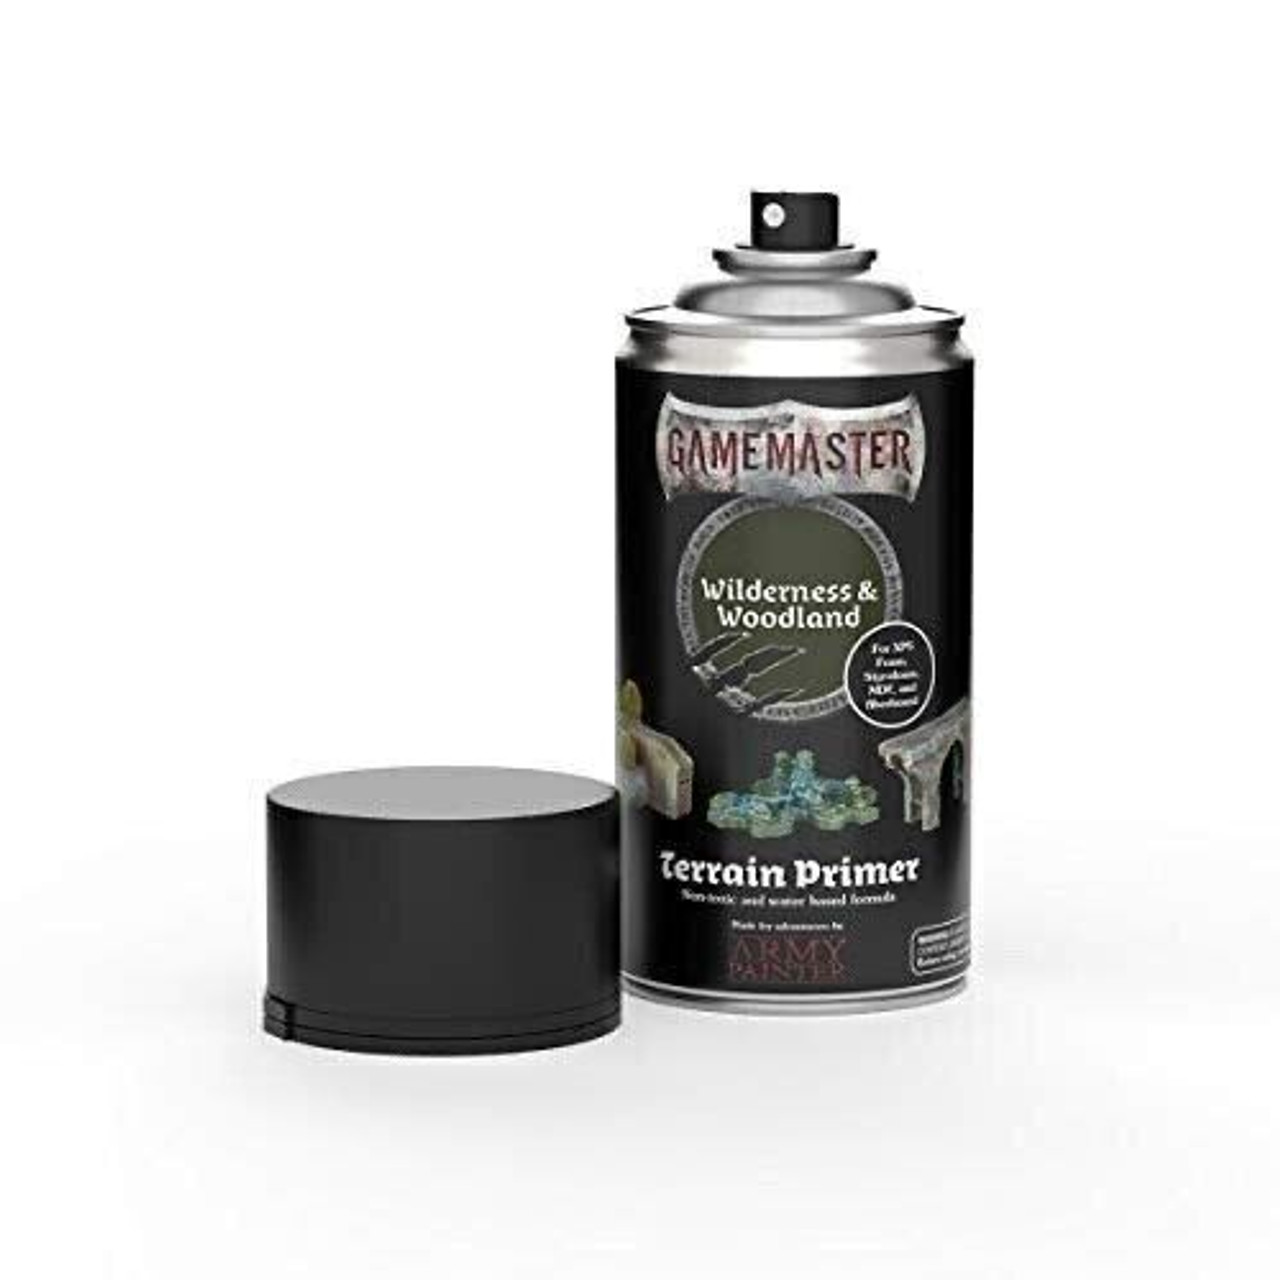 GameMaster - Terrain Primer: Wilderness & Woodland Spray Paint